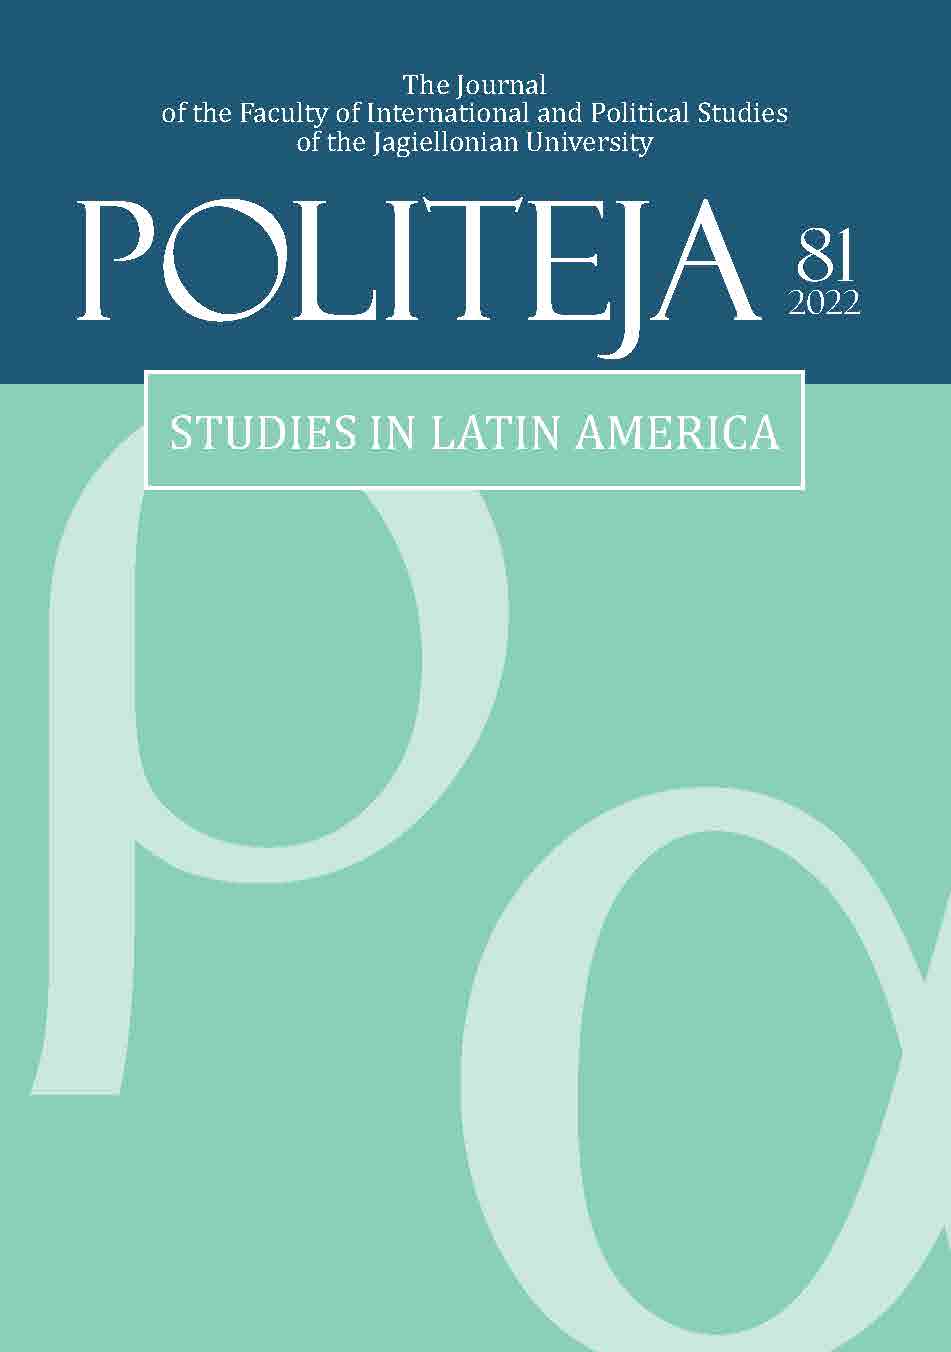 					View Vol. 19 No. 6(81) (2022): Studies in Latin America
				